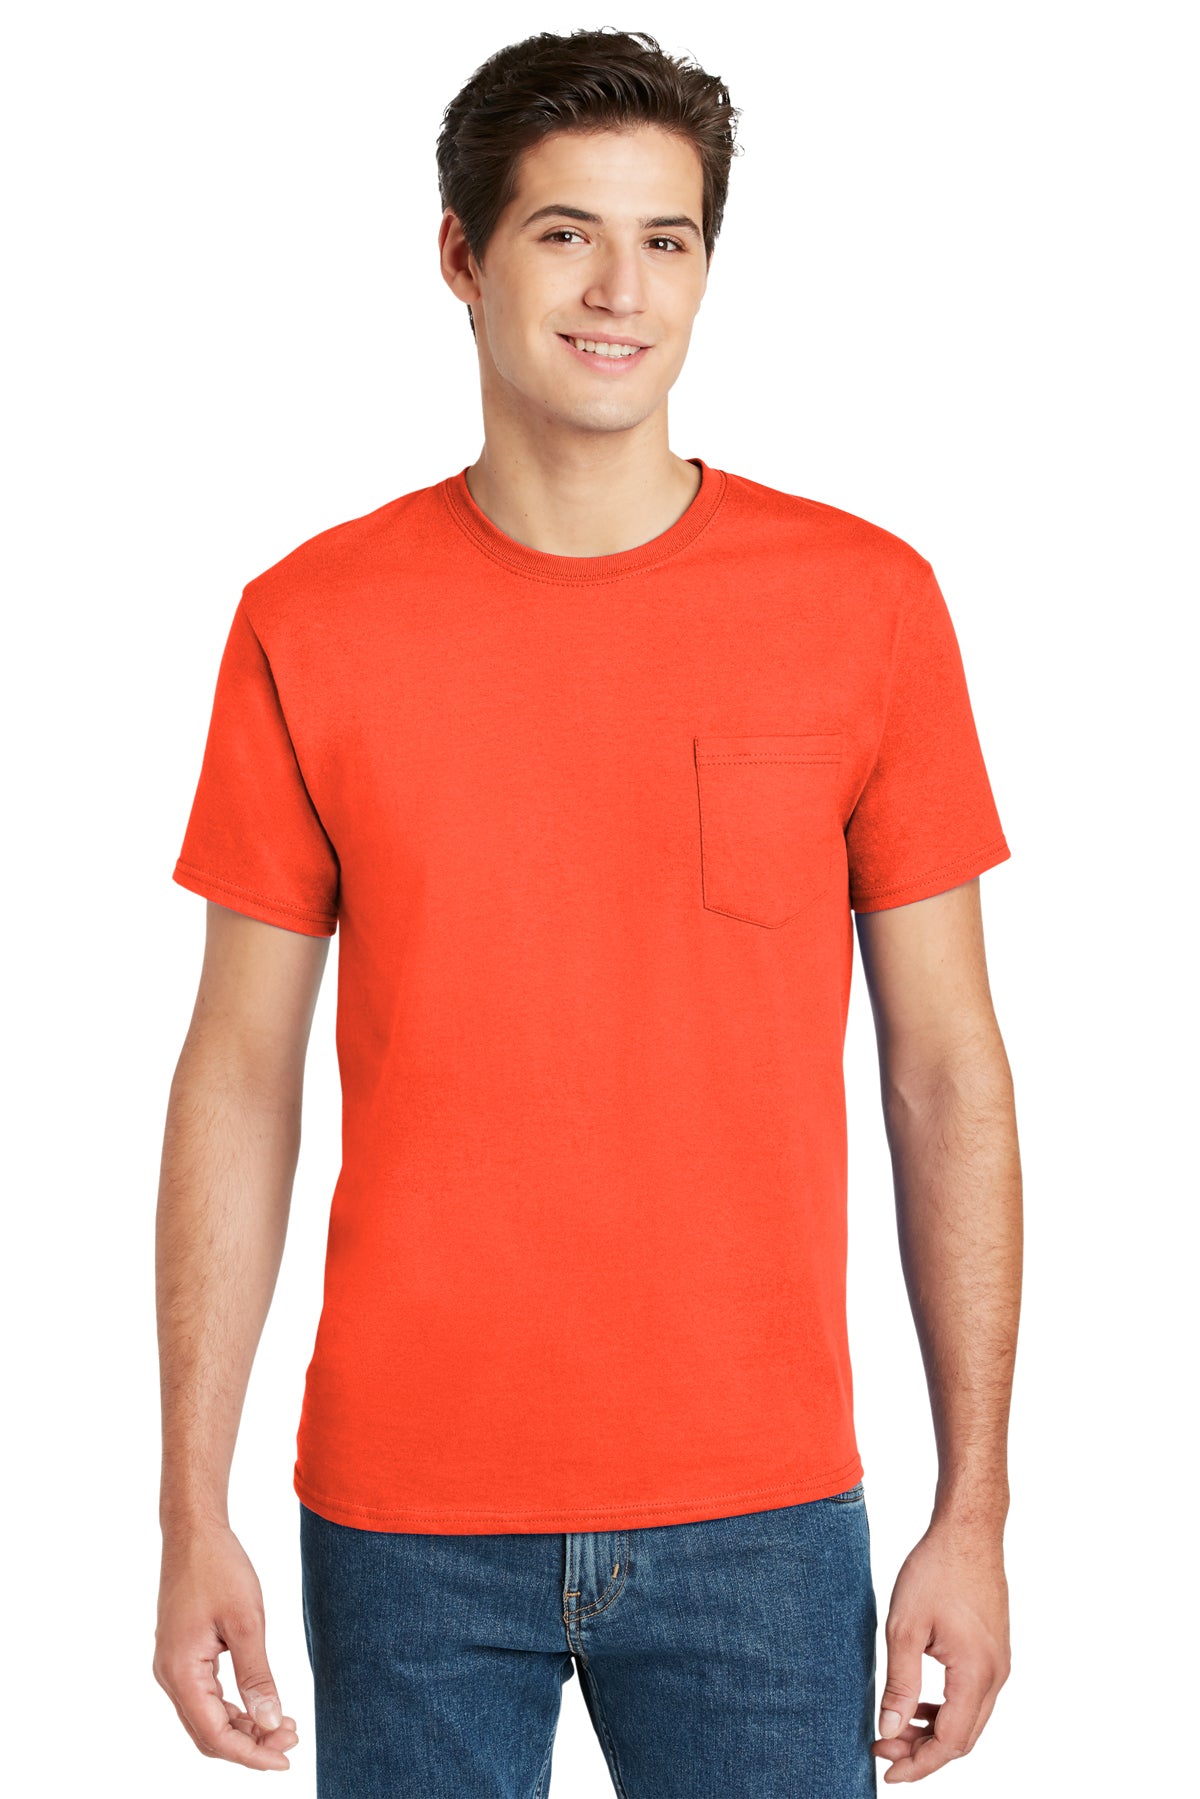 Hanes Tagless Pocket T-Shirt Ash / L